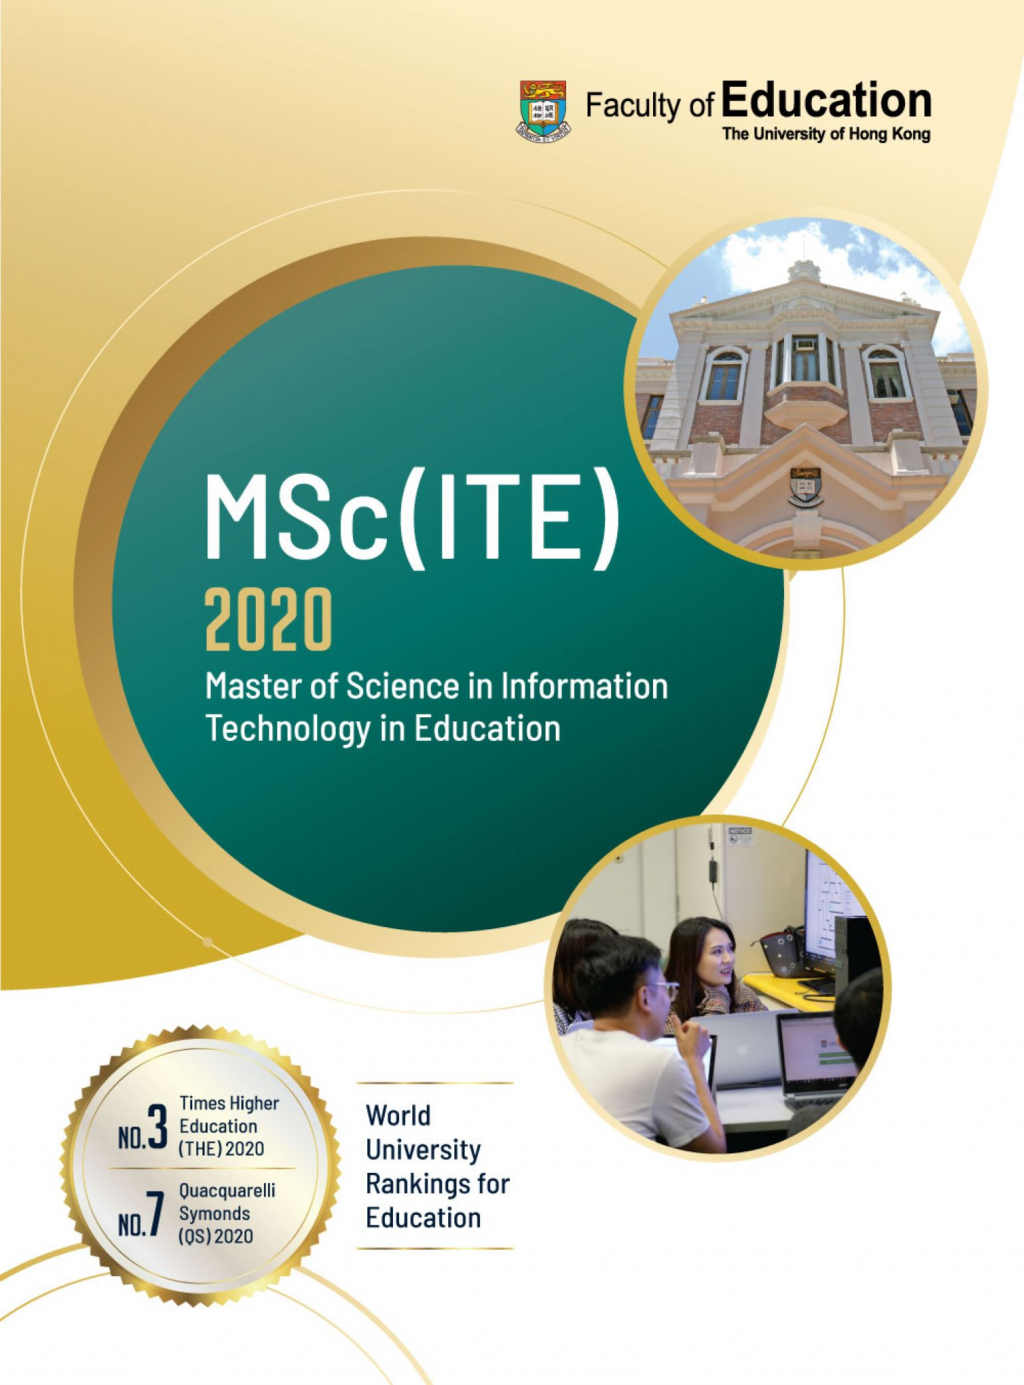 MSc(ITE) 2020 intake